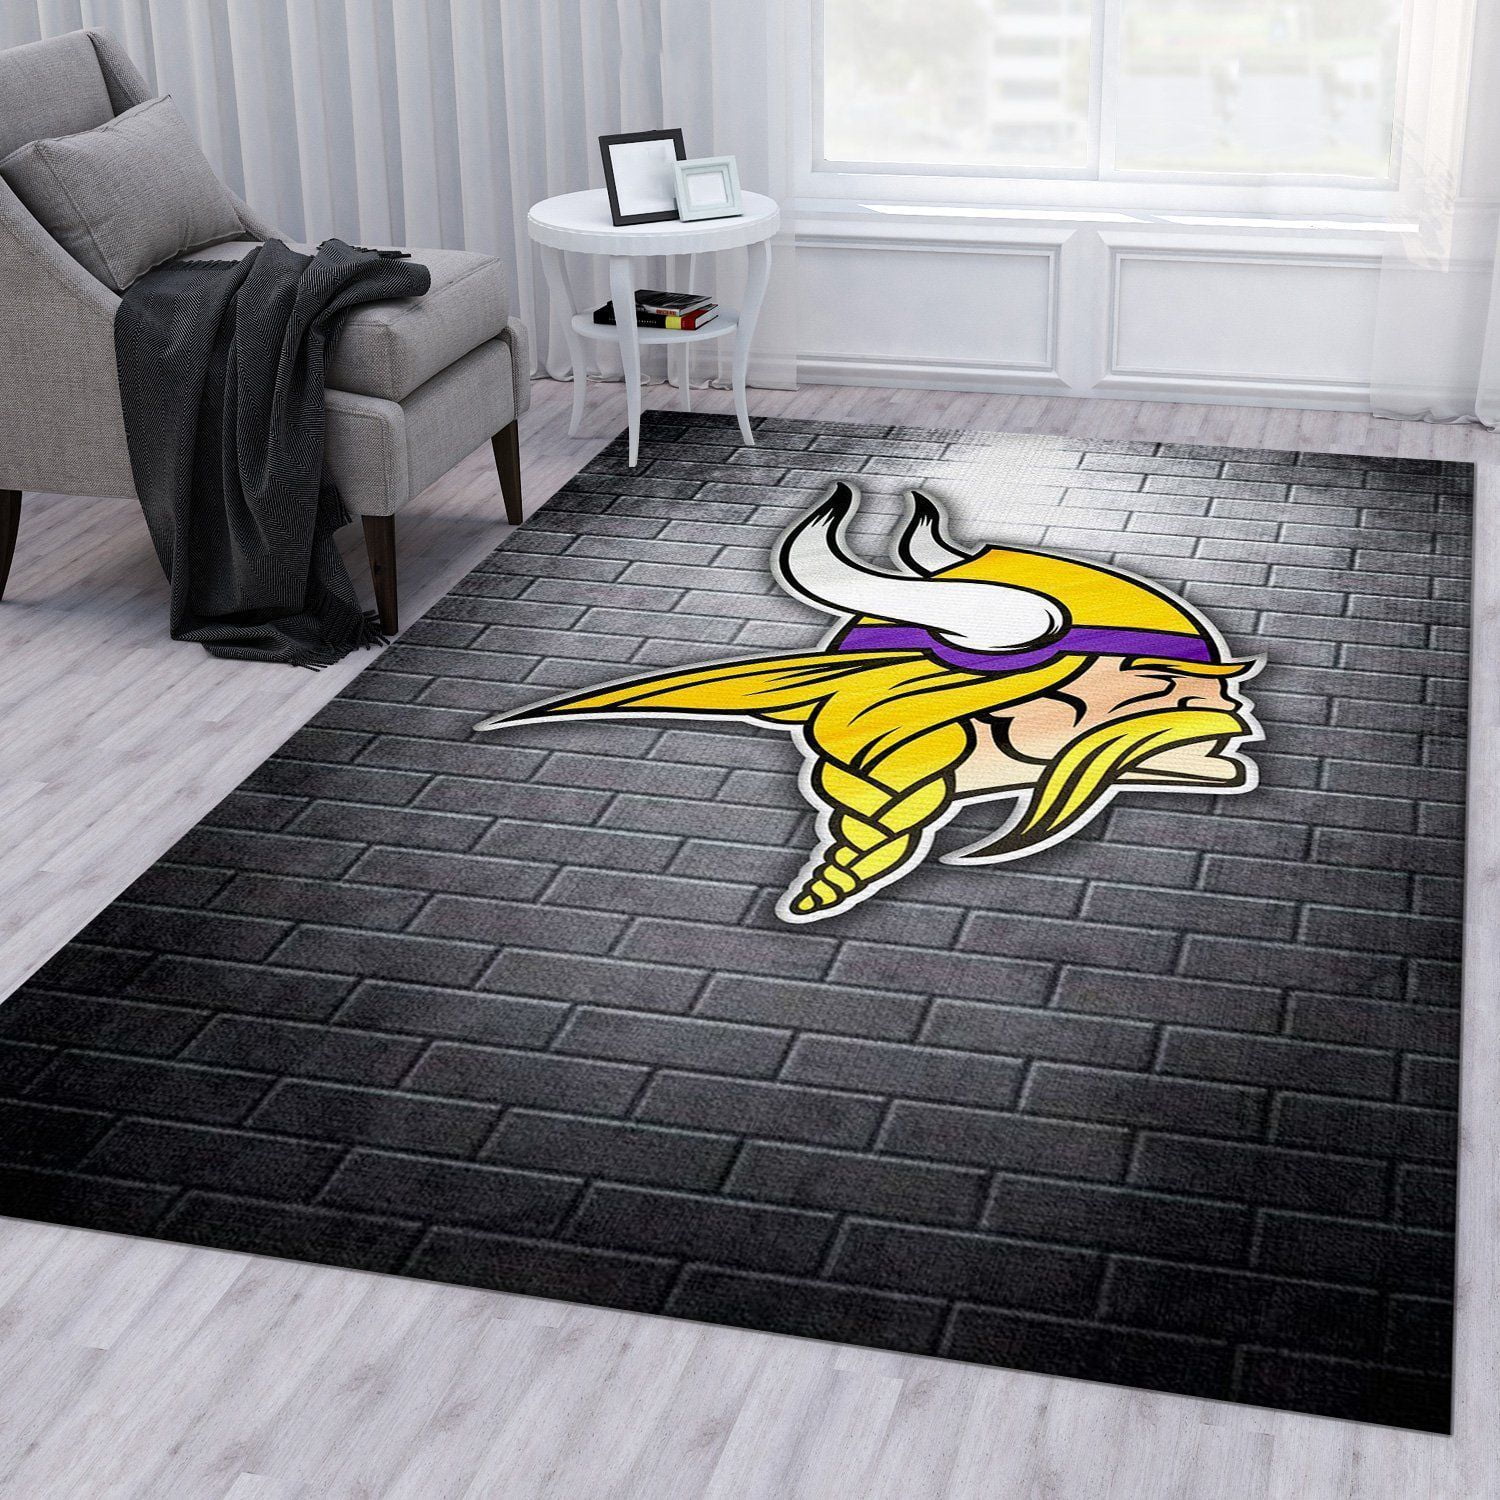 Minnesota Vikings Nfl Area Rug Bedroom Rug Home US Decor - Indoor Outdoor Rugs